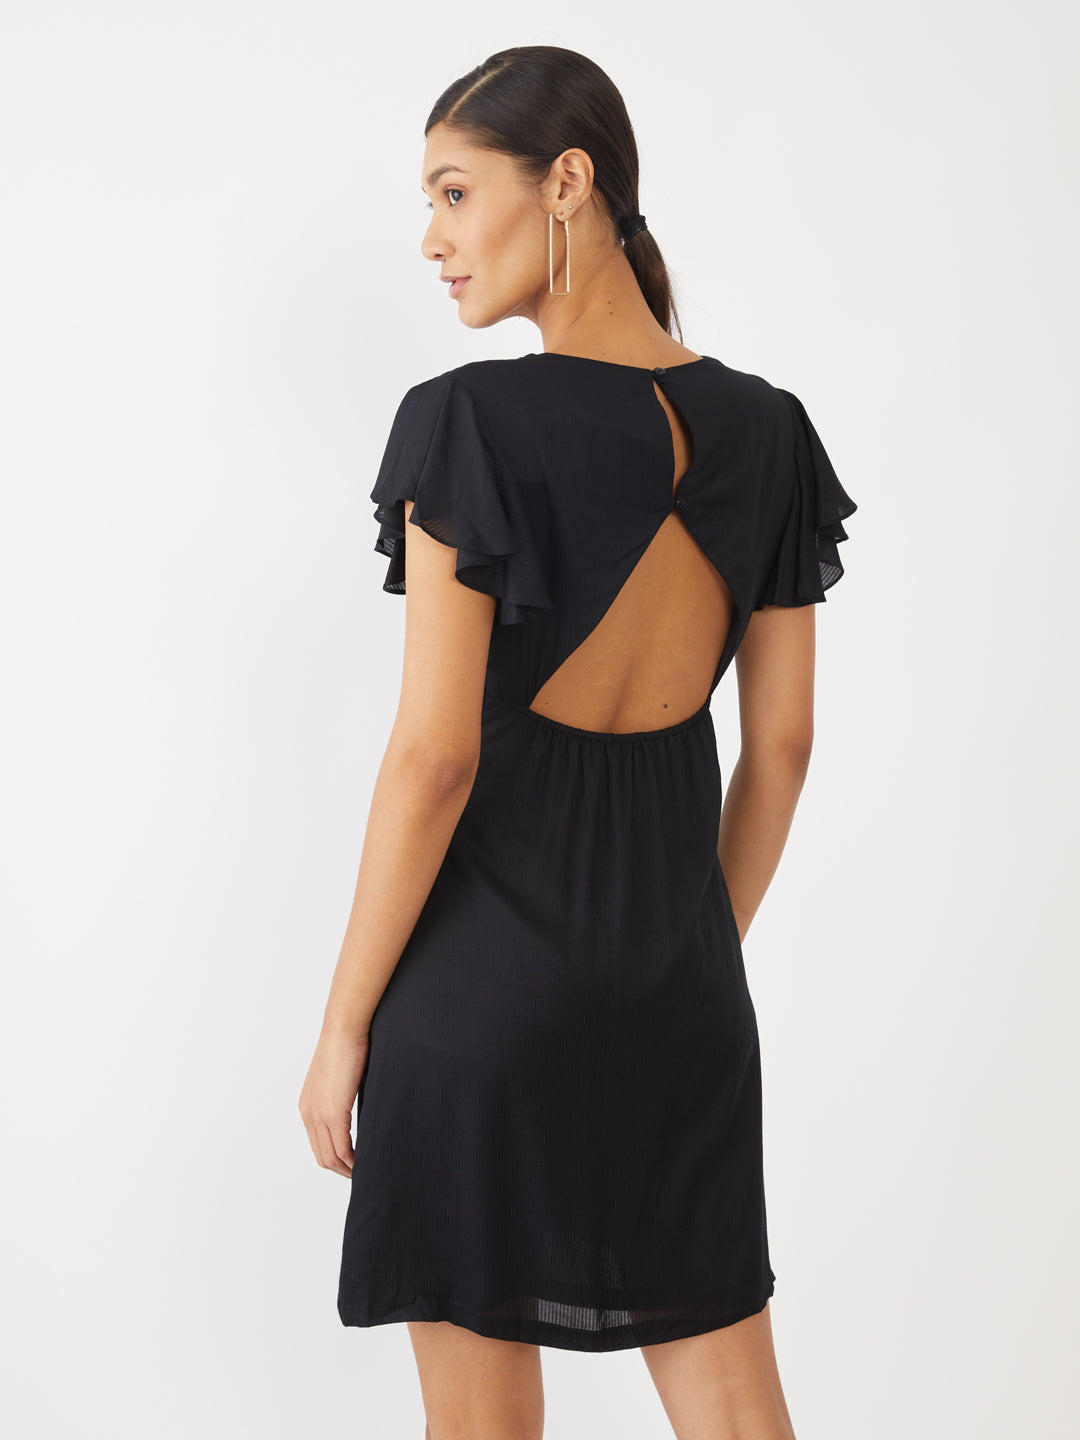 Black Solid Flared Sleeve Short Dress For Women